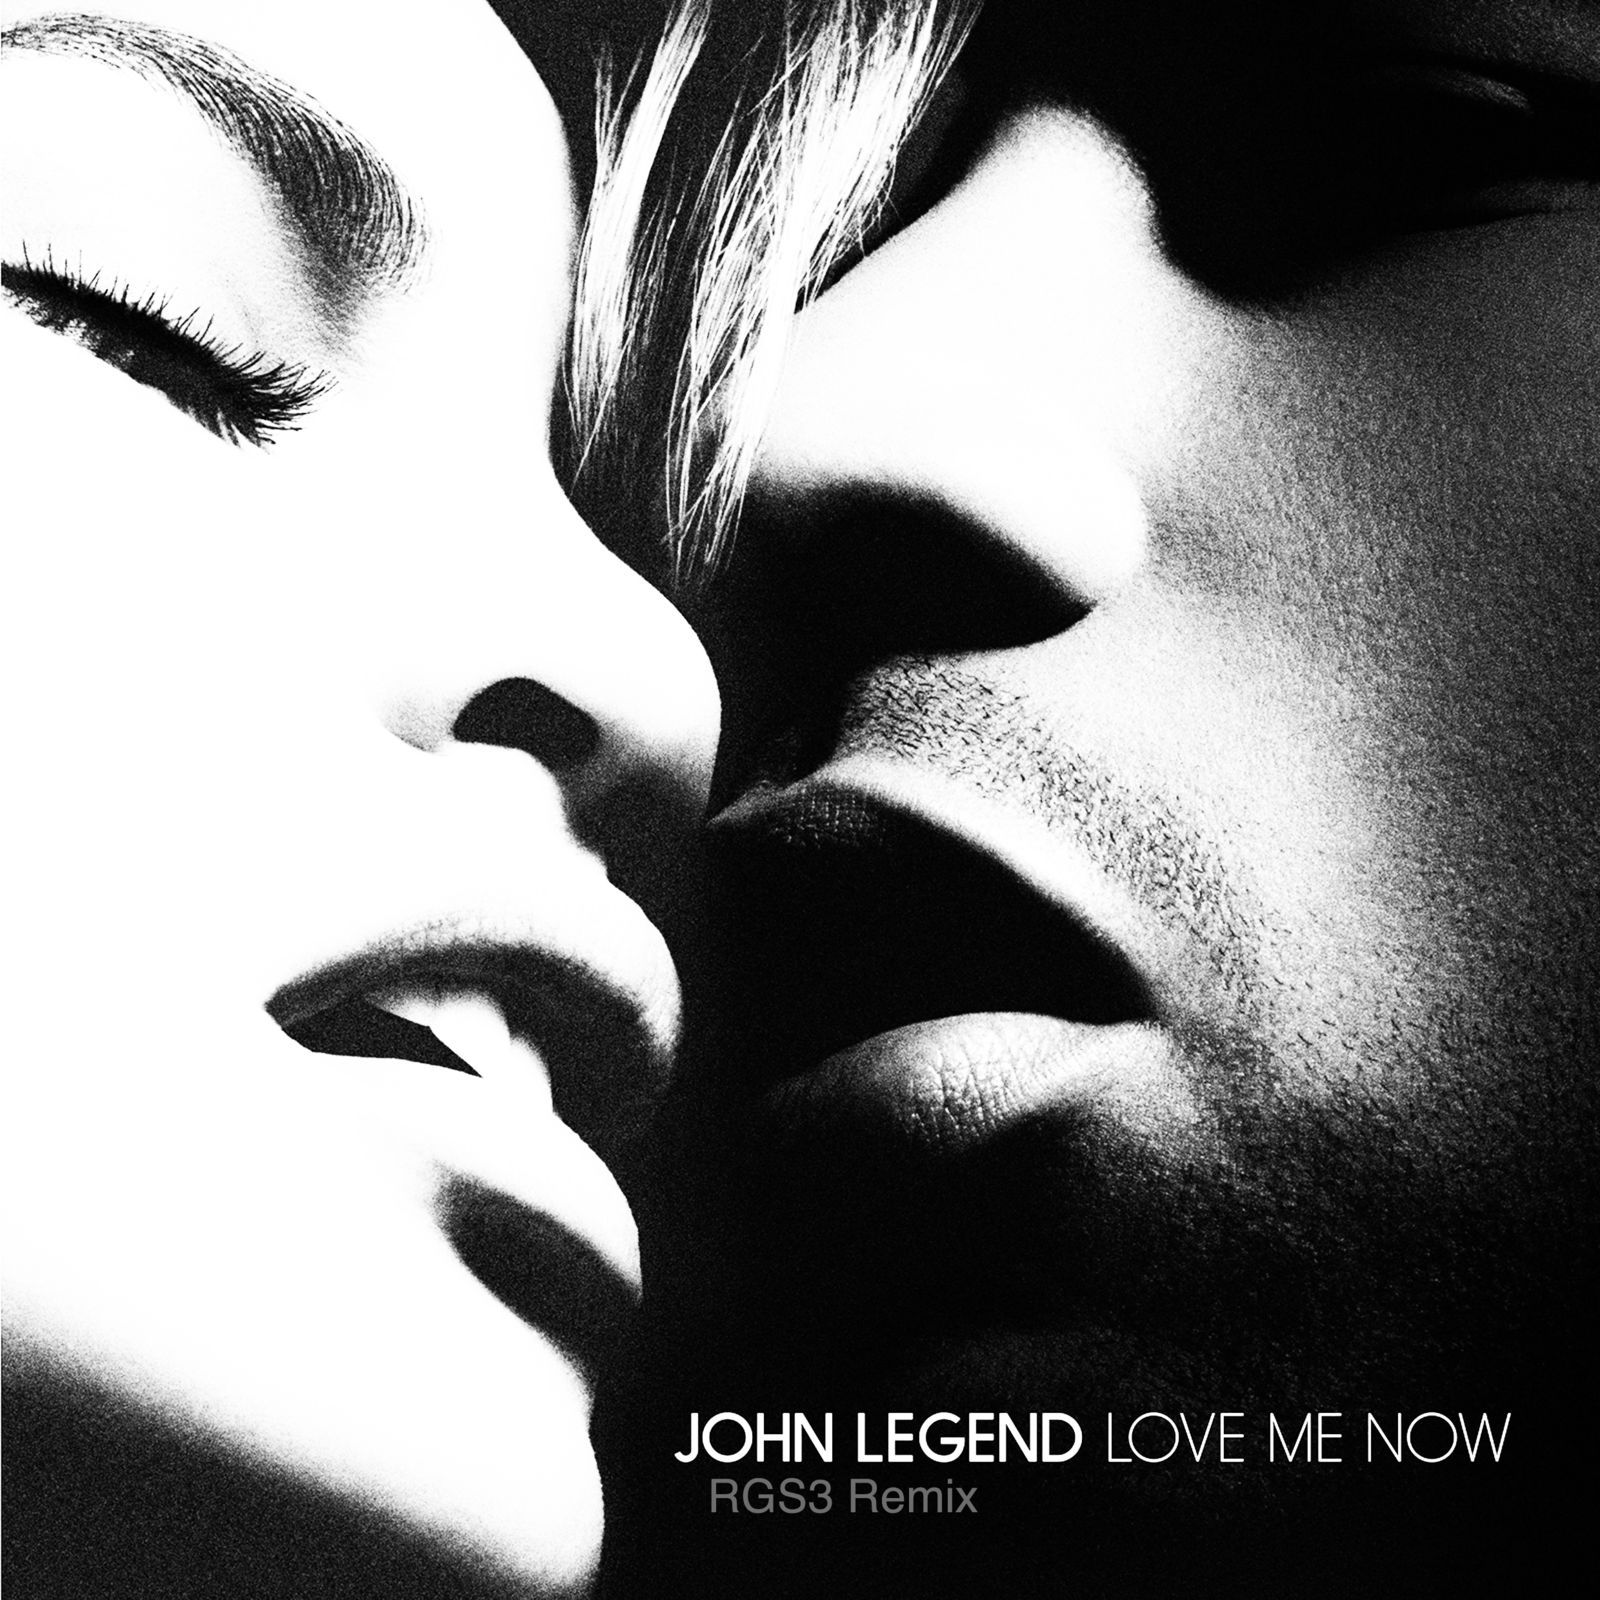 John legend love me now mp3 download fakaza